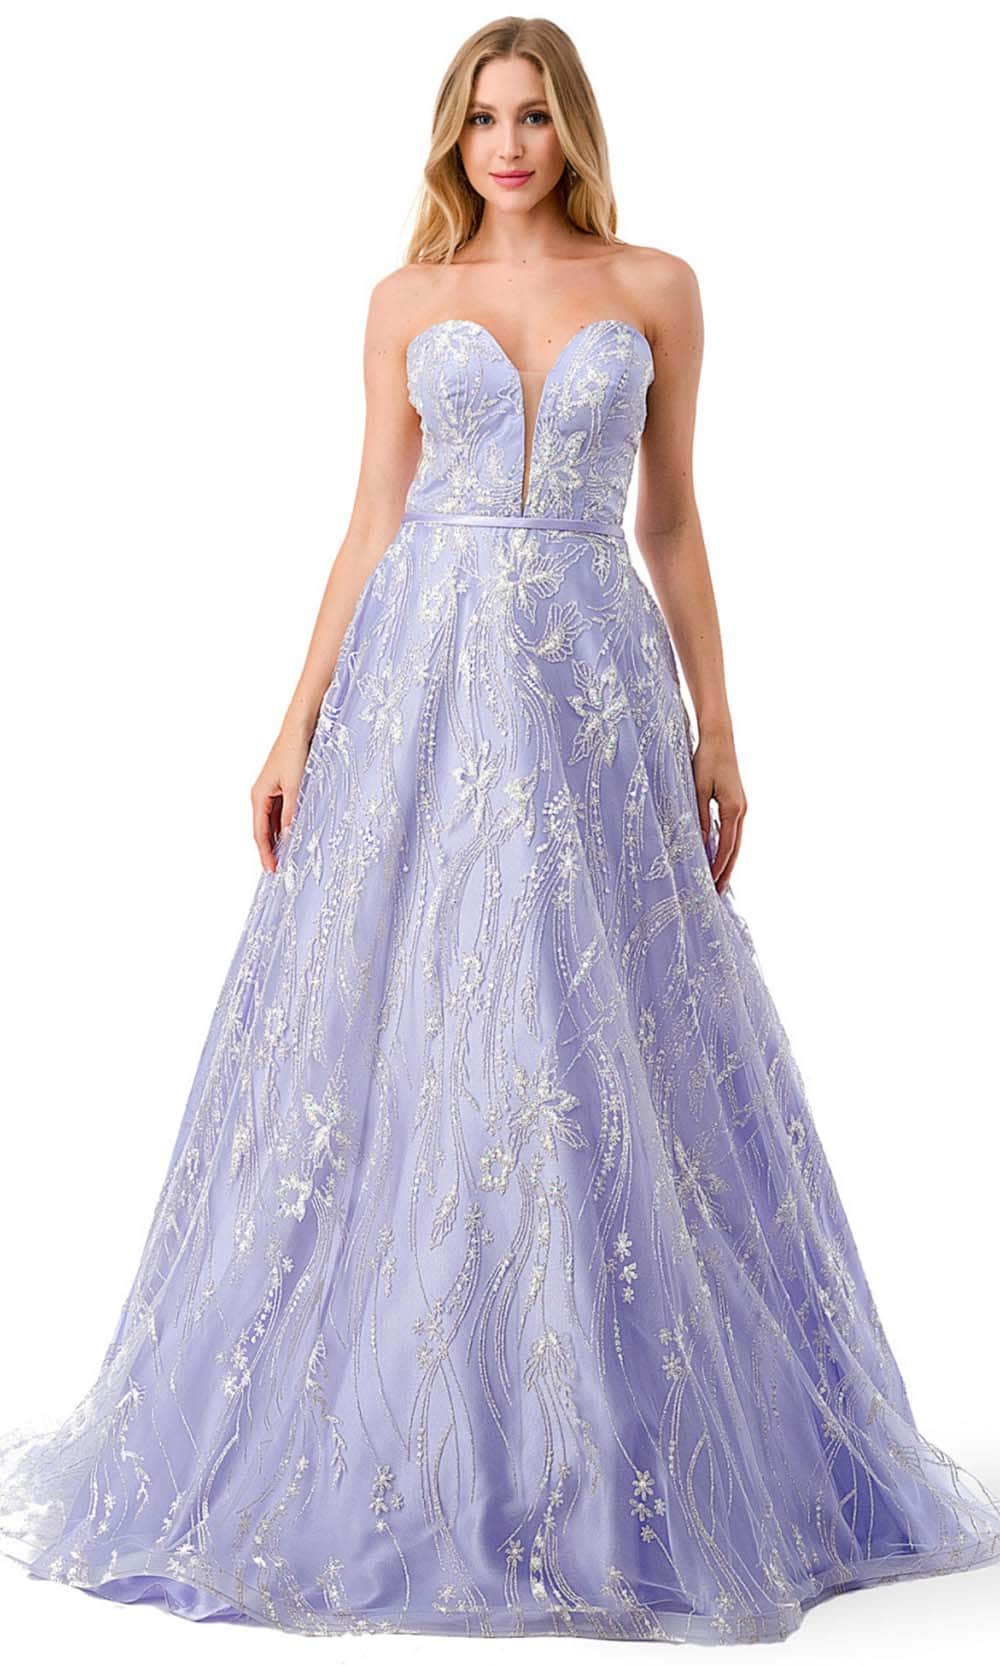 Image of Aspeed Design L2774B - Sweetheart Glitter Prom Dress